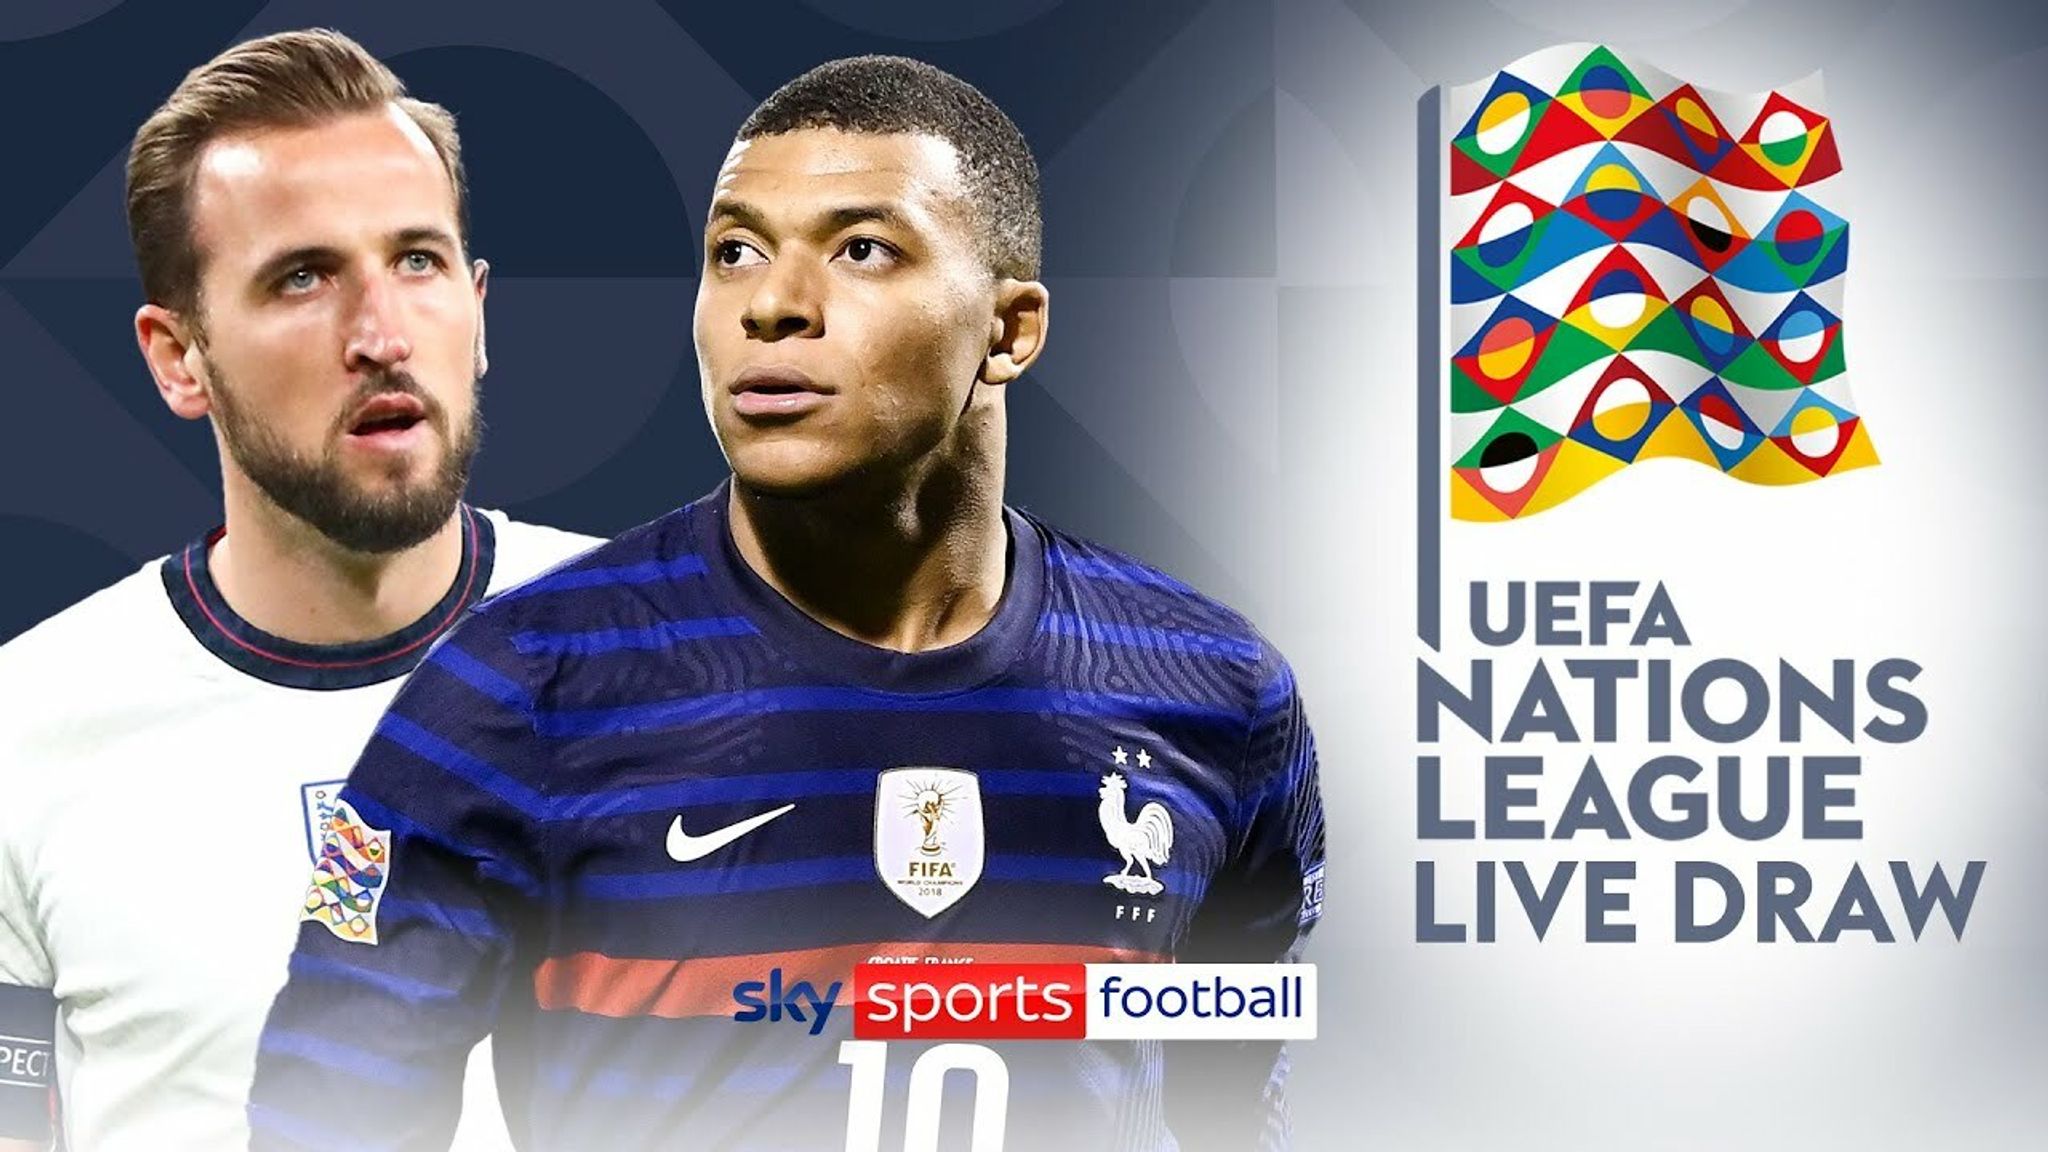 uefa nations league live